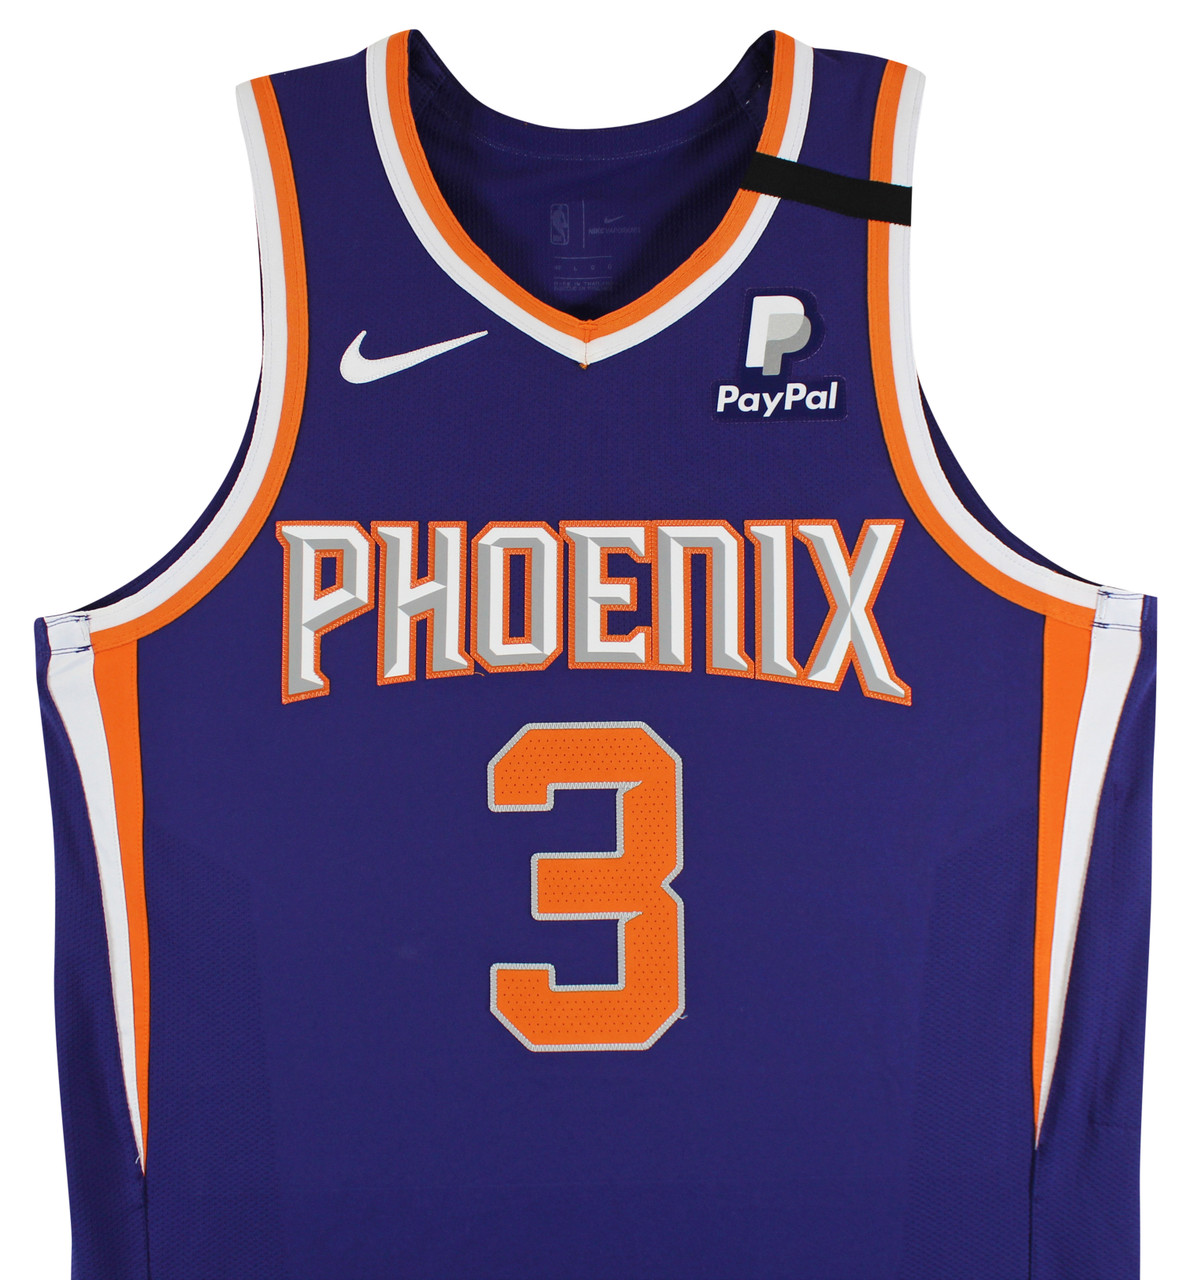 Chris Paul - Phoenix Suns - Game-Worn City Edition Jersey - Worn 2